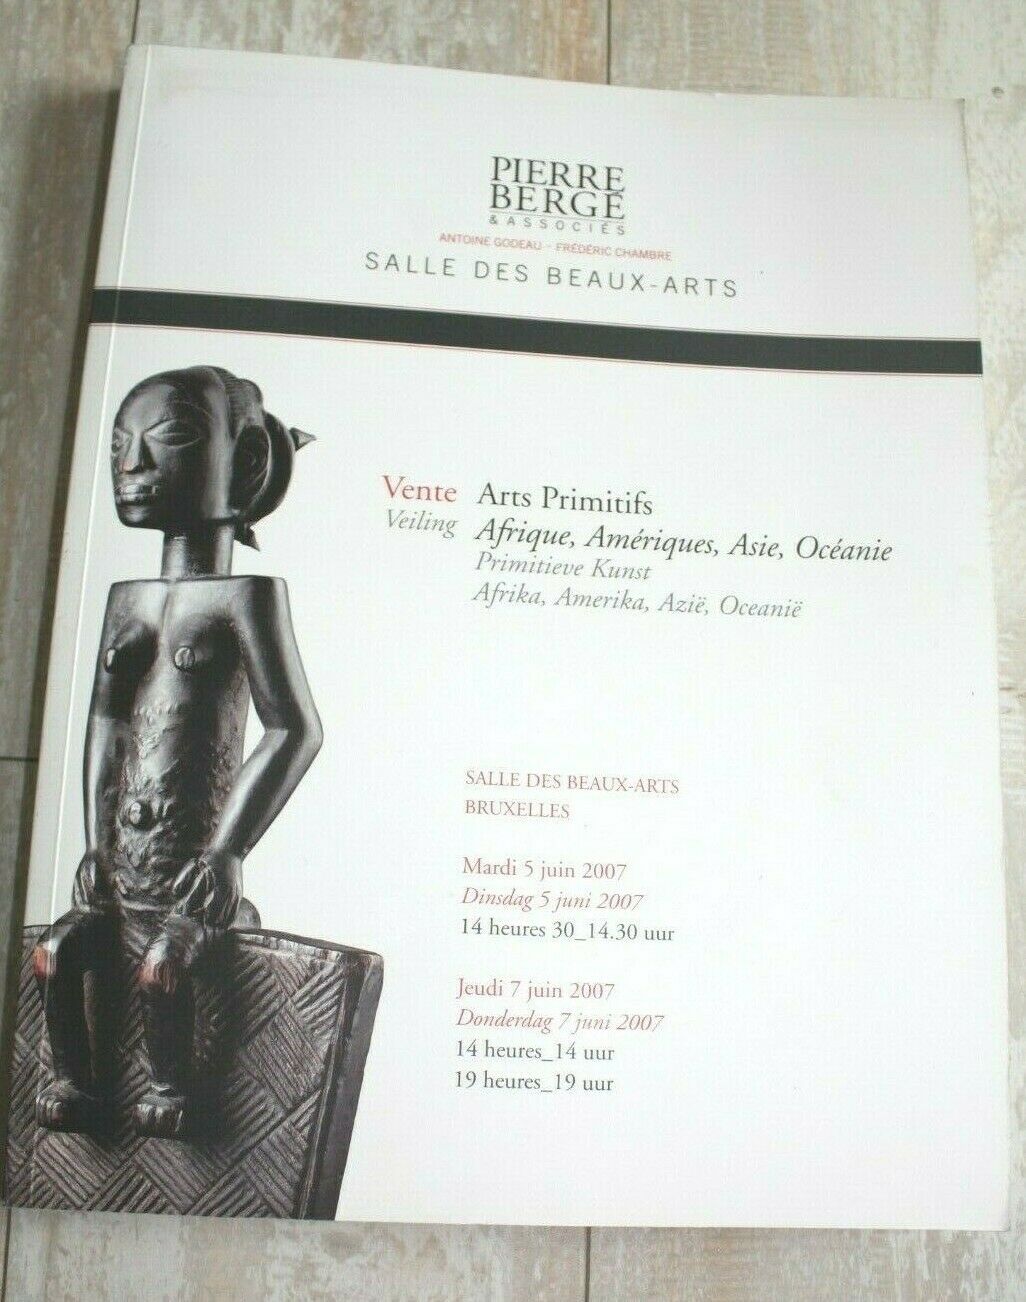 Pierre Berge Tribal Art Auction Catalog, Africa, Americas, Asian, Oceanic, 2007